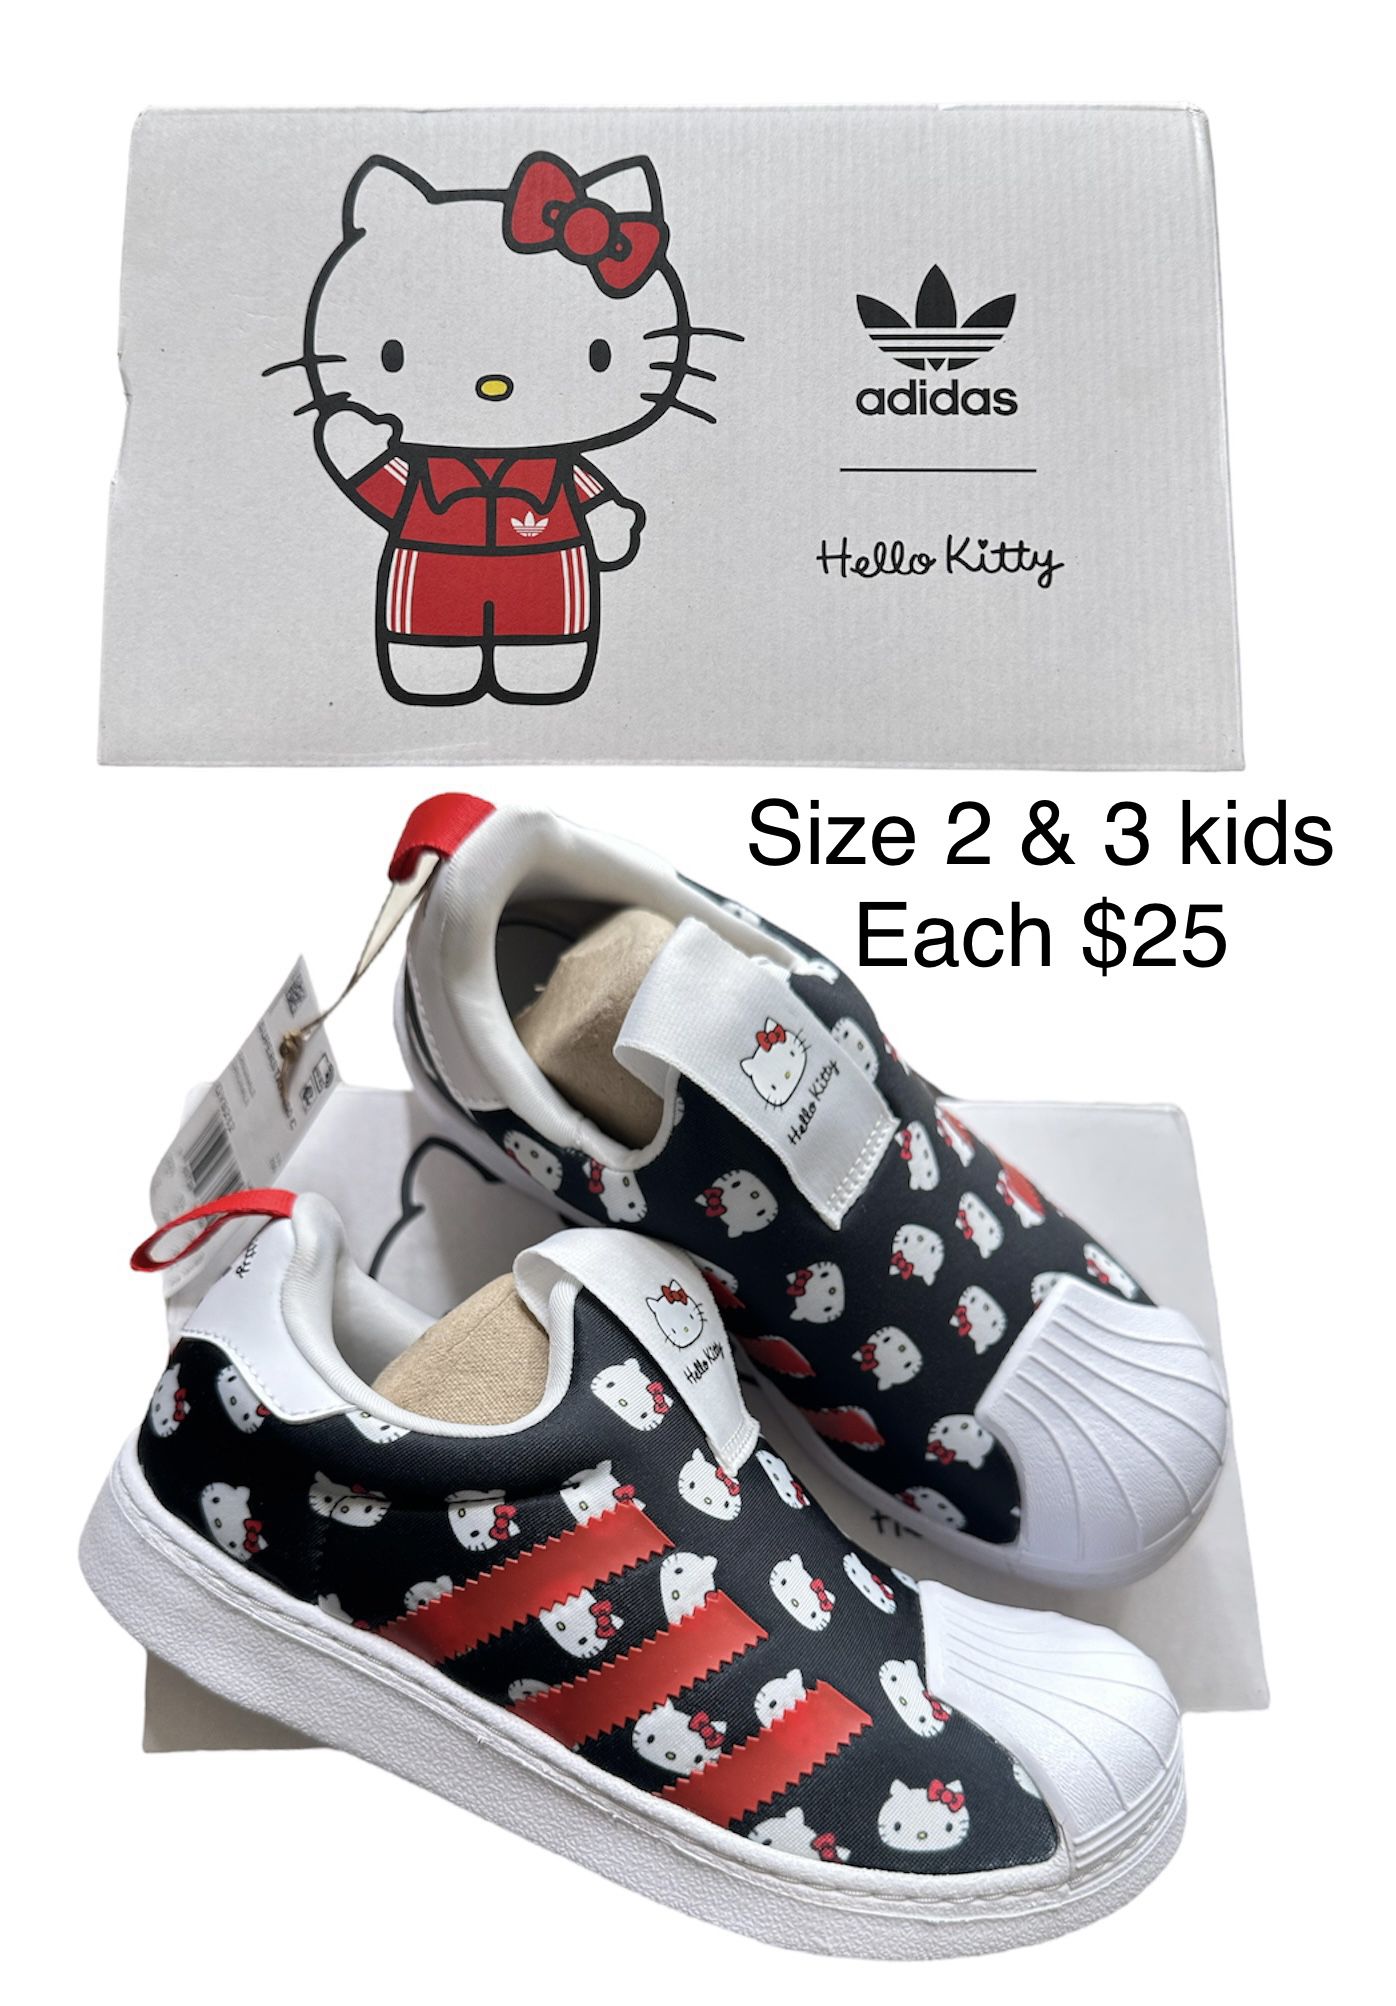 Adidas Hello Kitty Shoes